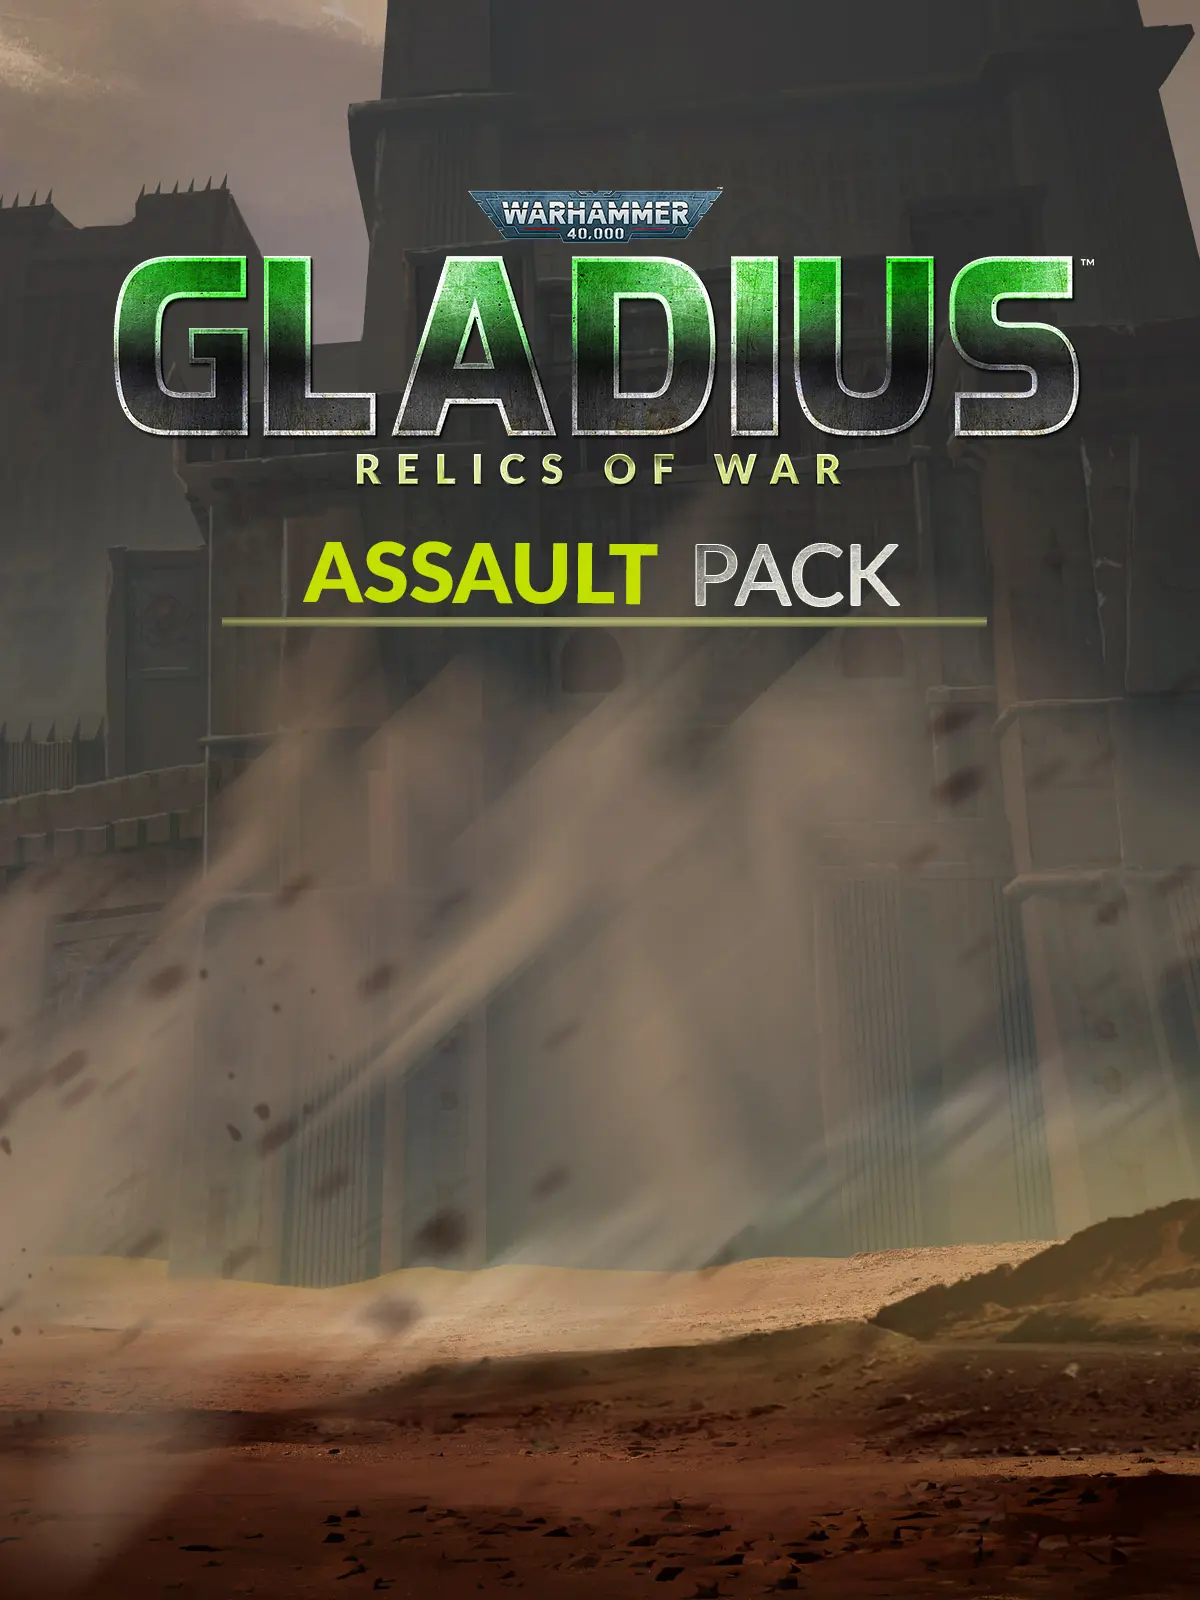 Warhammer 40,000: Gladius - Assault Pack DLC (PC / Linux) - Steam - Digital Code